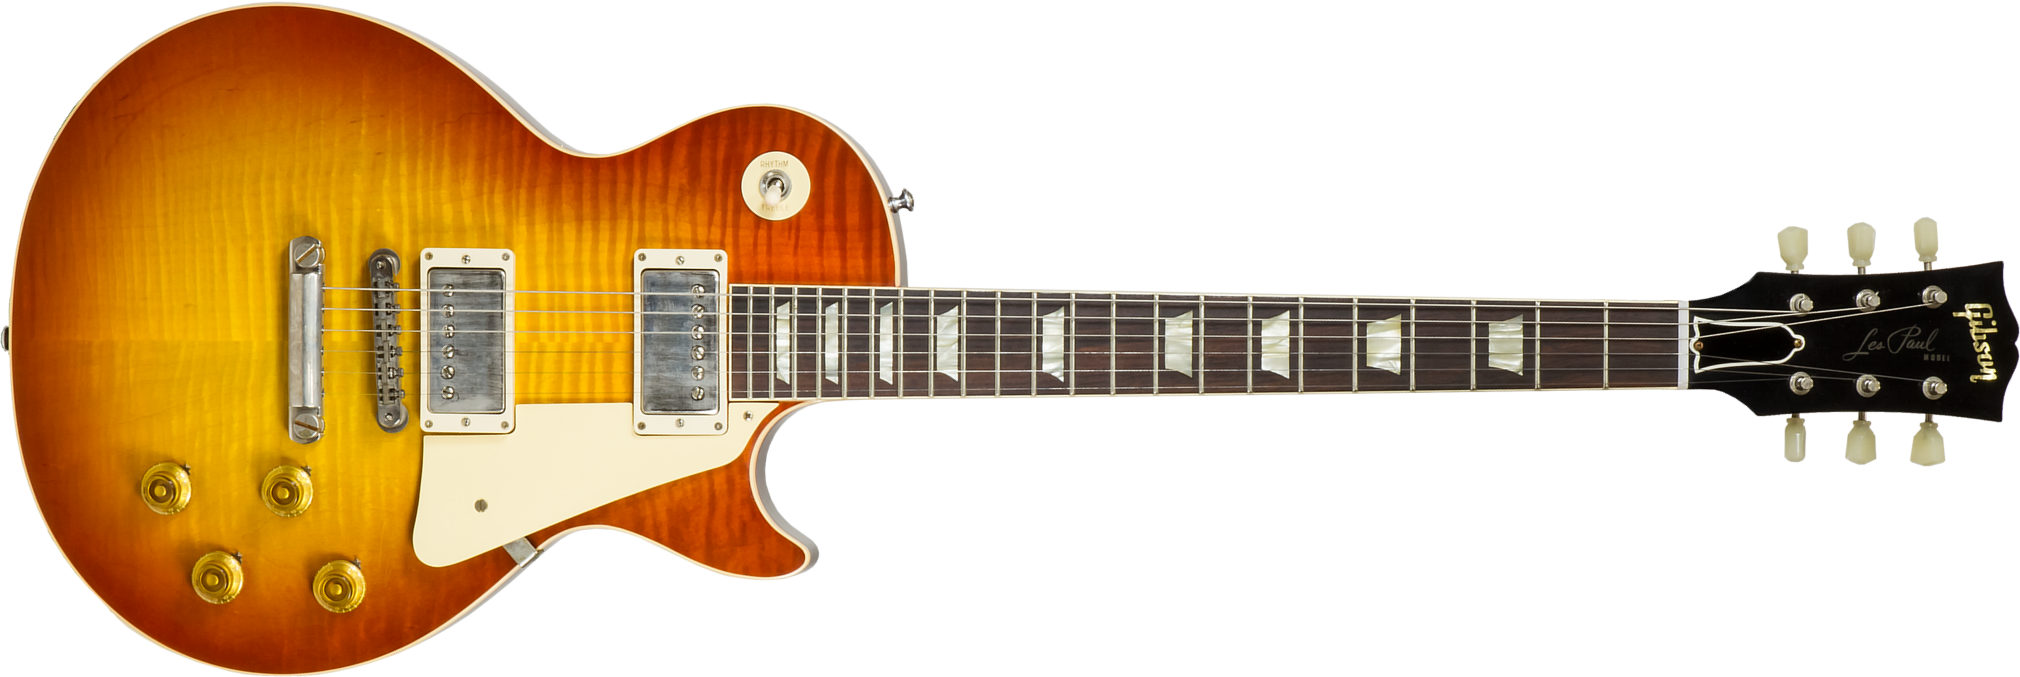 Gibson Custom Shop Les Paul Standard 1960 V1 60th Anniversary #001496 - Vos Antiquity Burst - Guitarra eléctrica de corte único. - Main picture